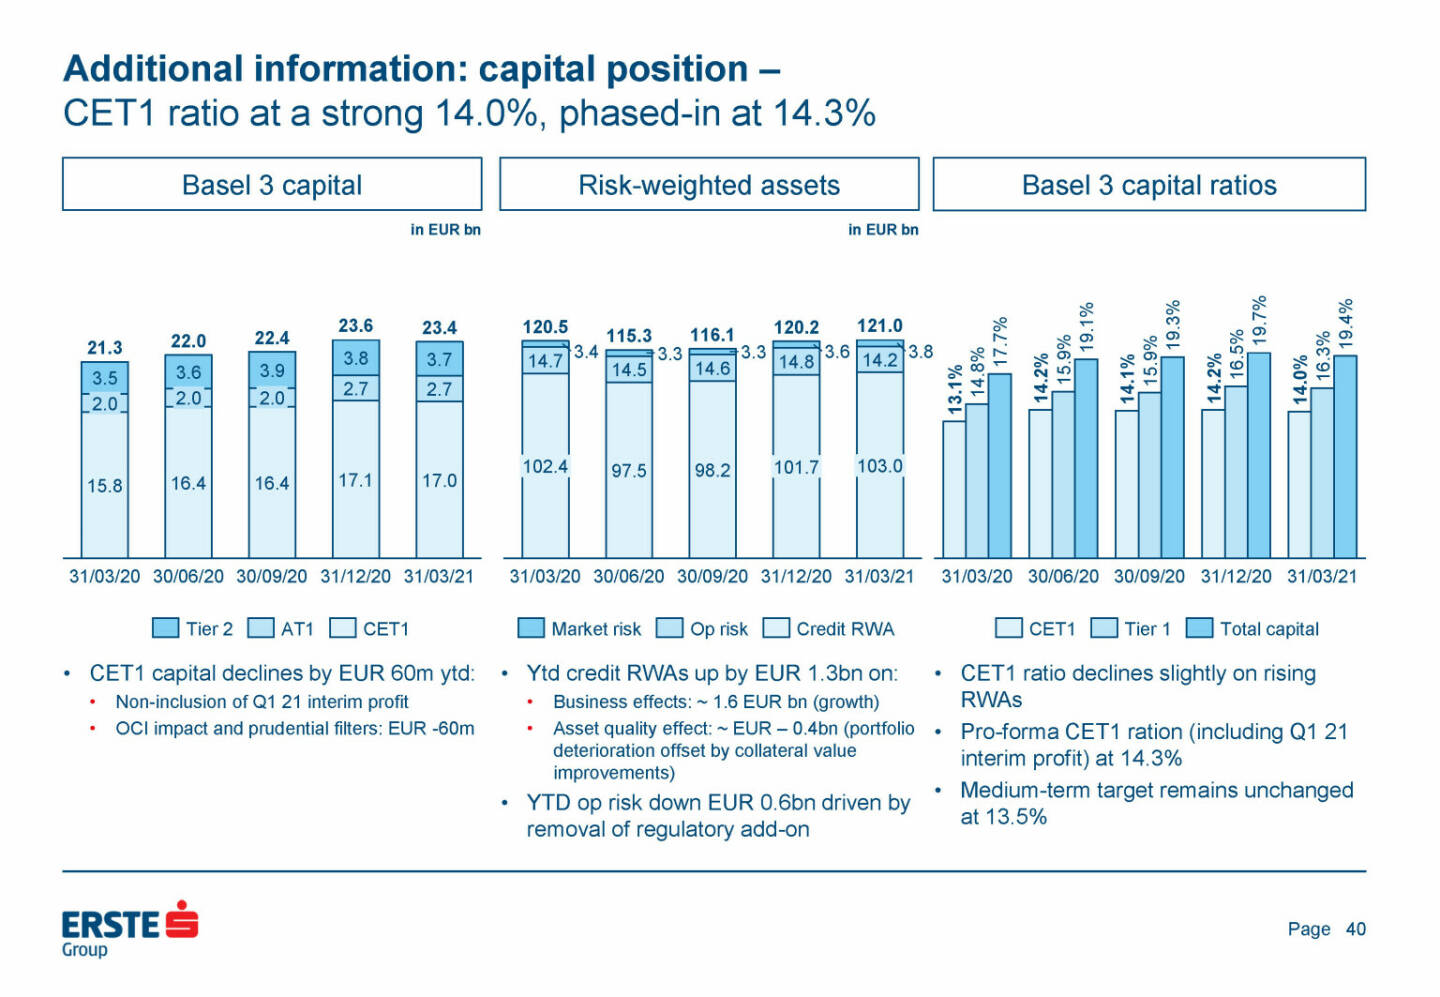 Erste Group - Additional information: capital position 